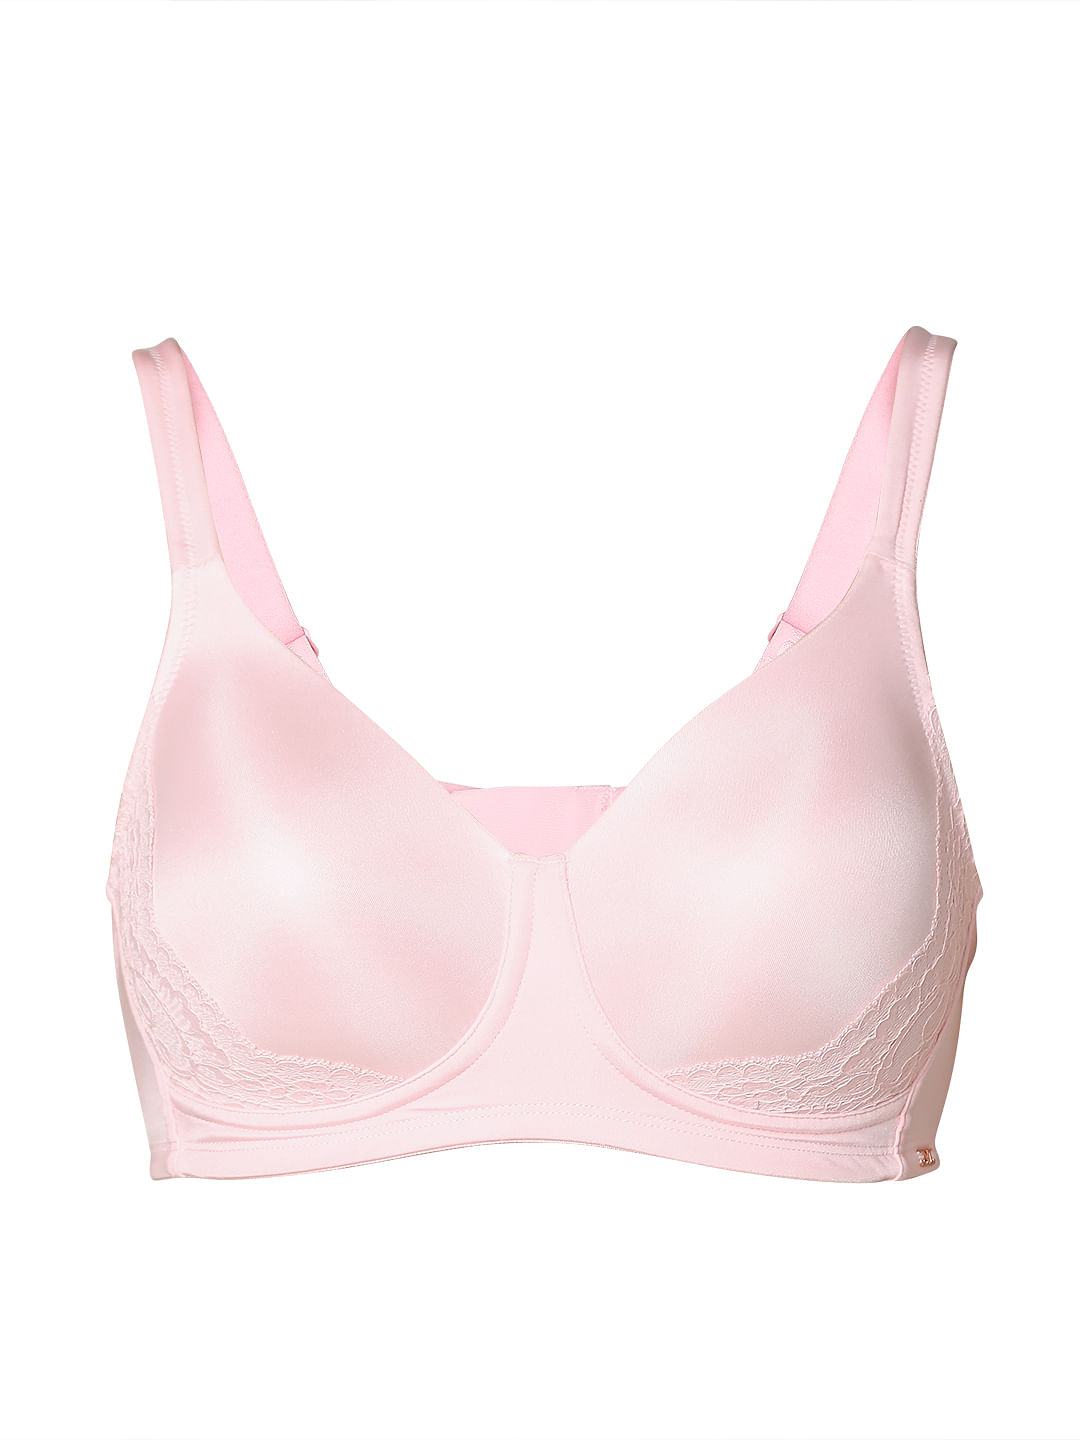 MAMIA Intimates Pink Polyester Adjustable Strap Solid T-Shirt Bra Size: 40C  レディース - インナー・下着・ランジェリー